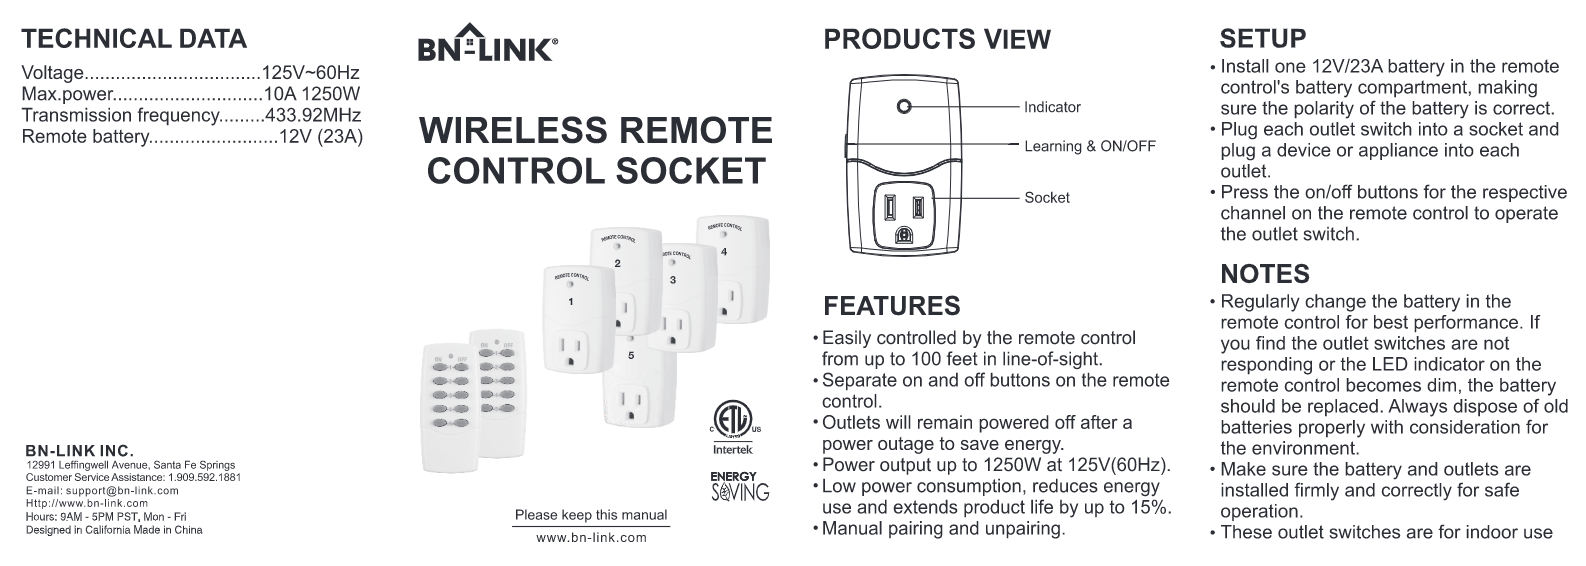 BN-LINK BNR-U117 Wireless Remote Control Socket User Manual